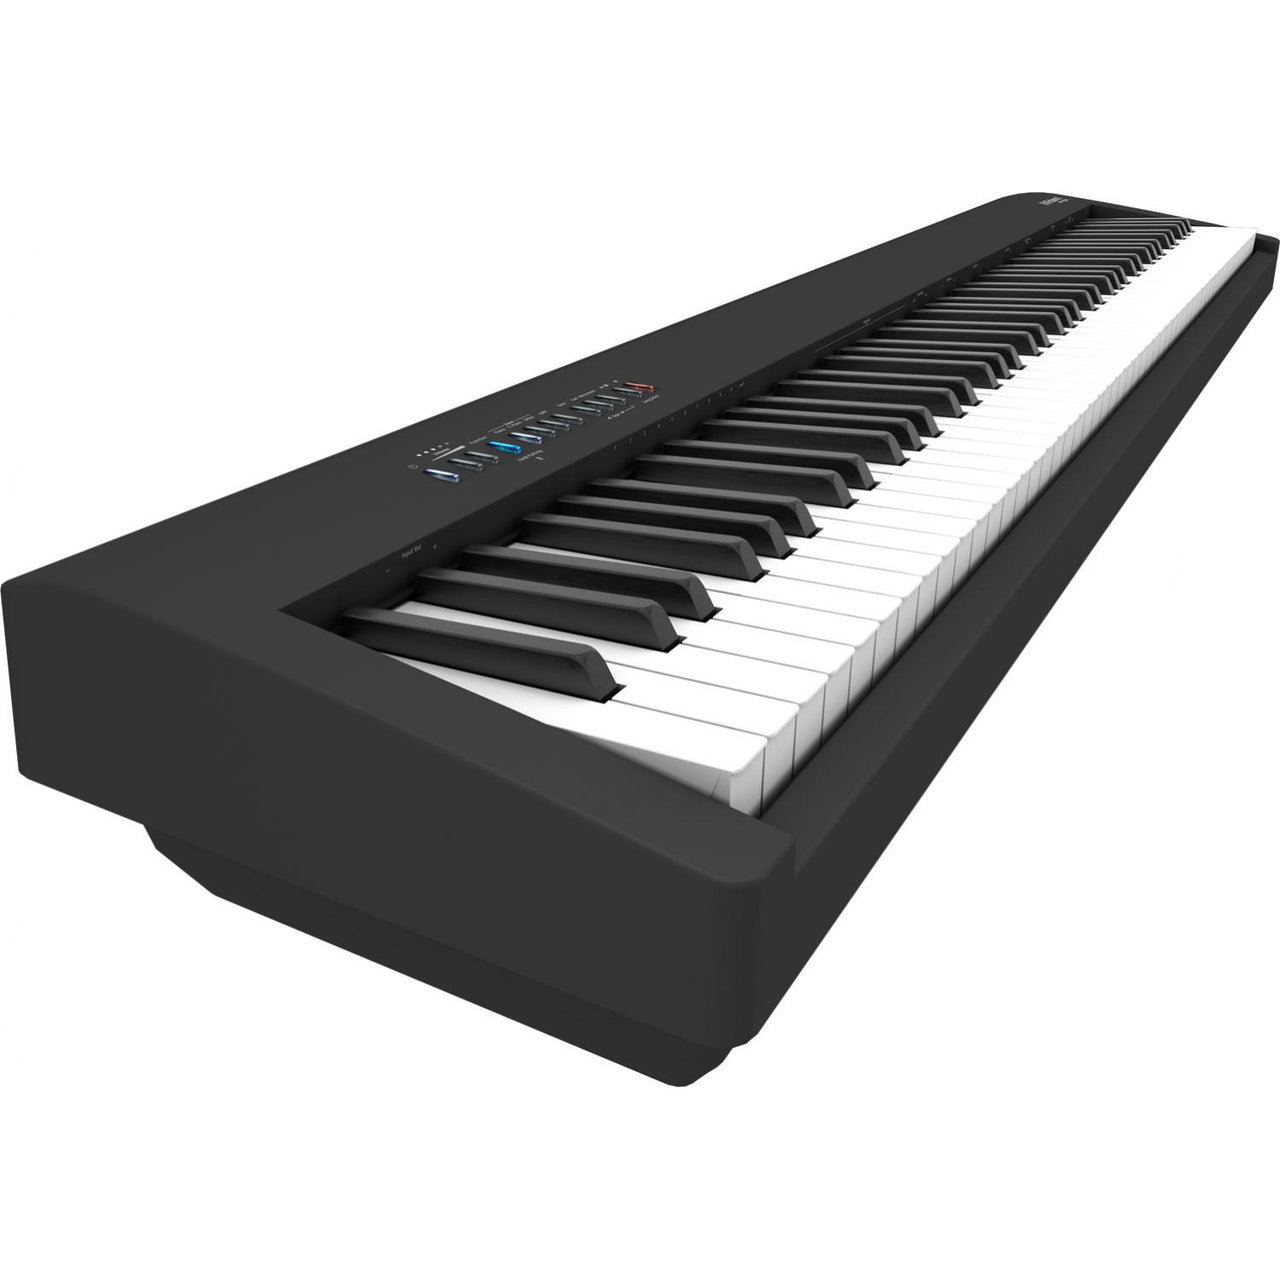 Piano Digital Roland 88 Teclas Acabado Negro C/bluetooth, Fp-30x-bk